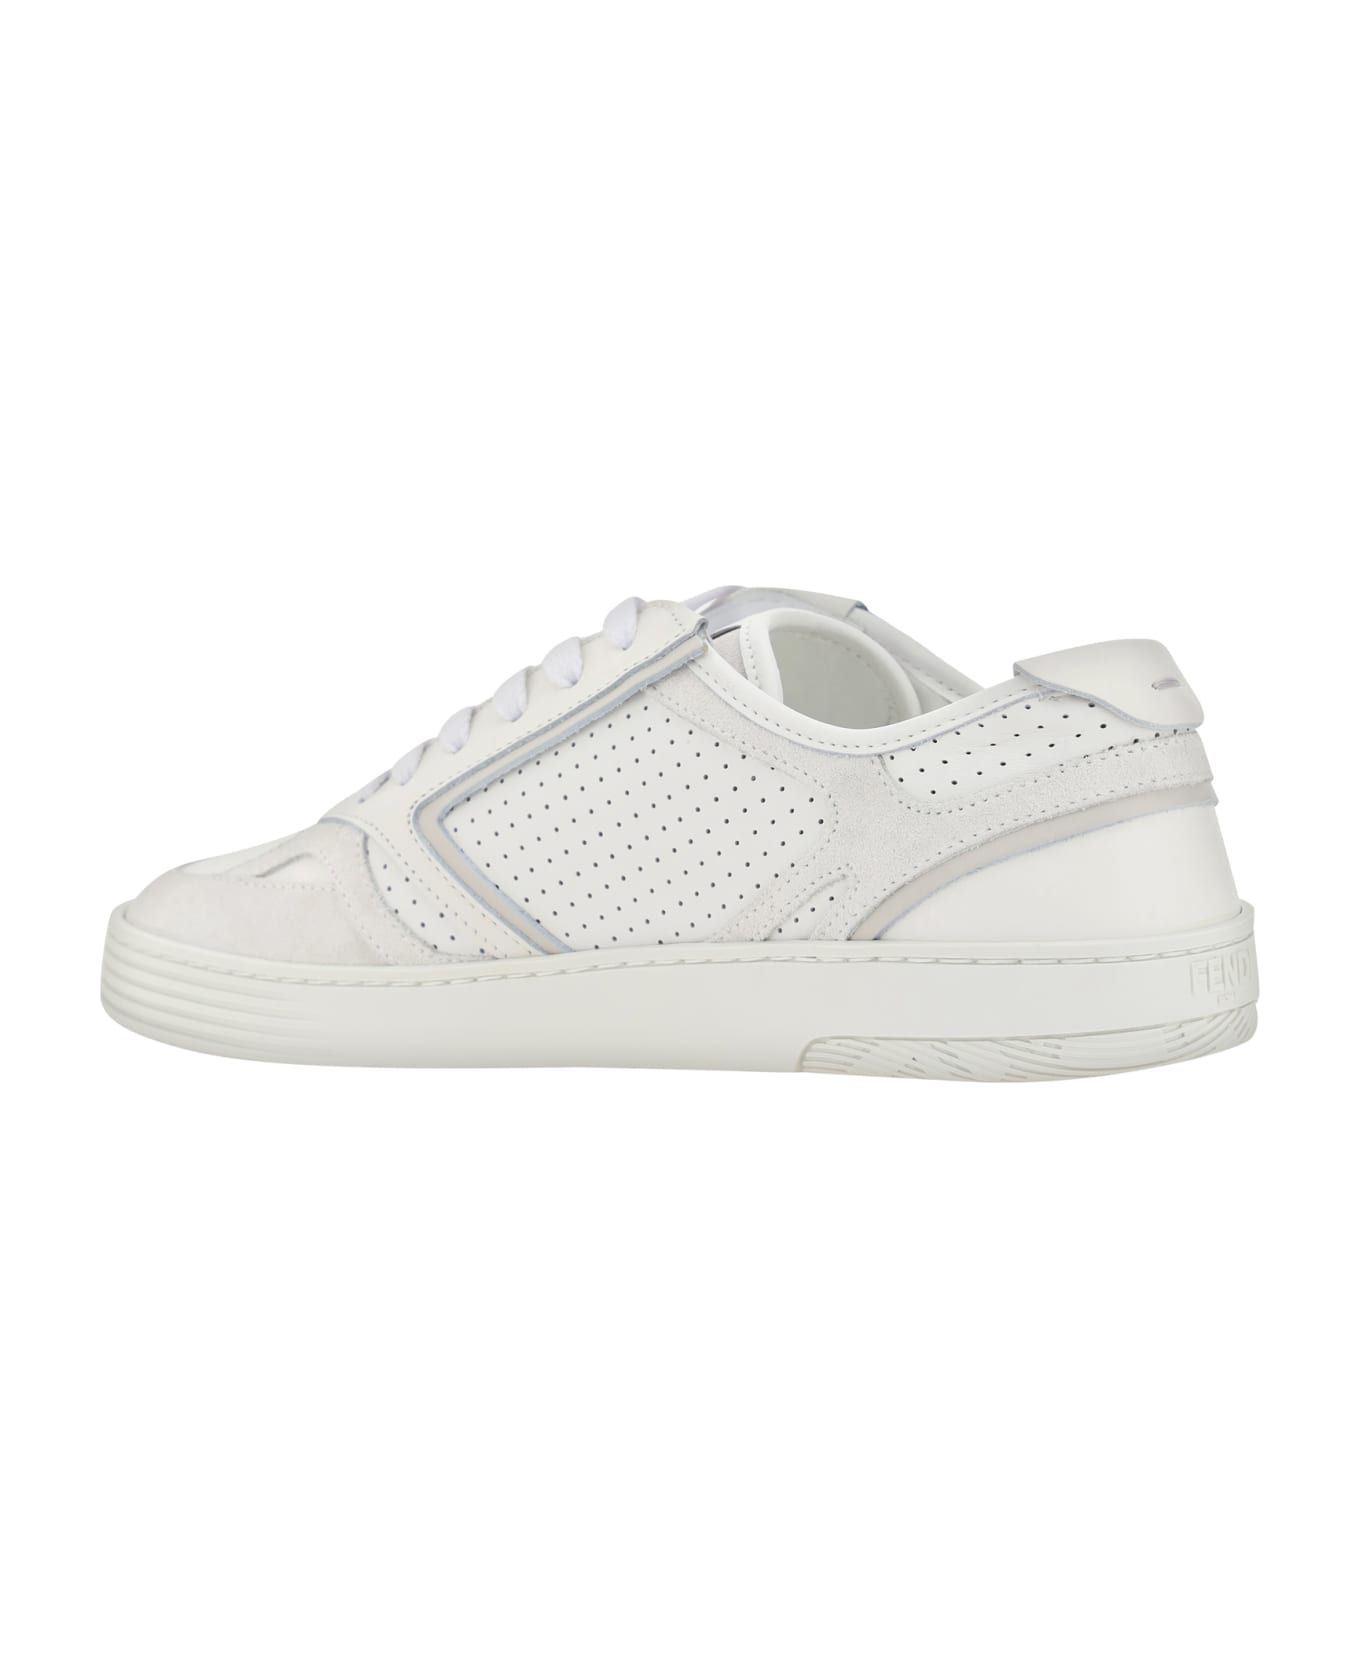 Fendi Low-top Sneakers - Bianco/ghiaccio スニーカー